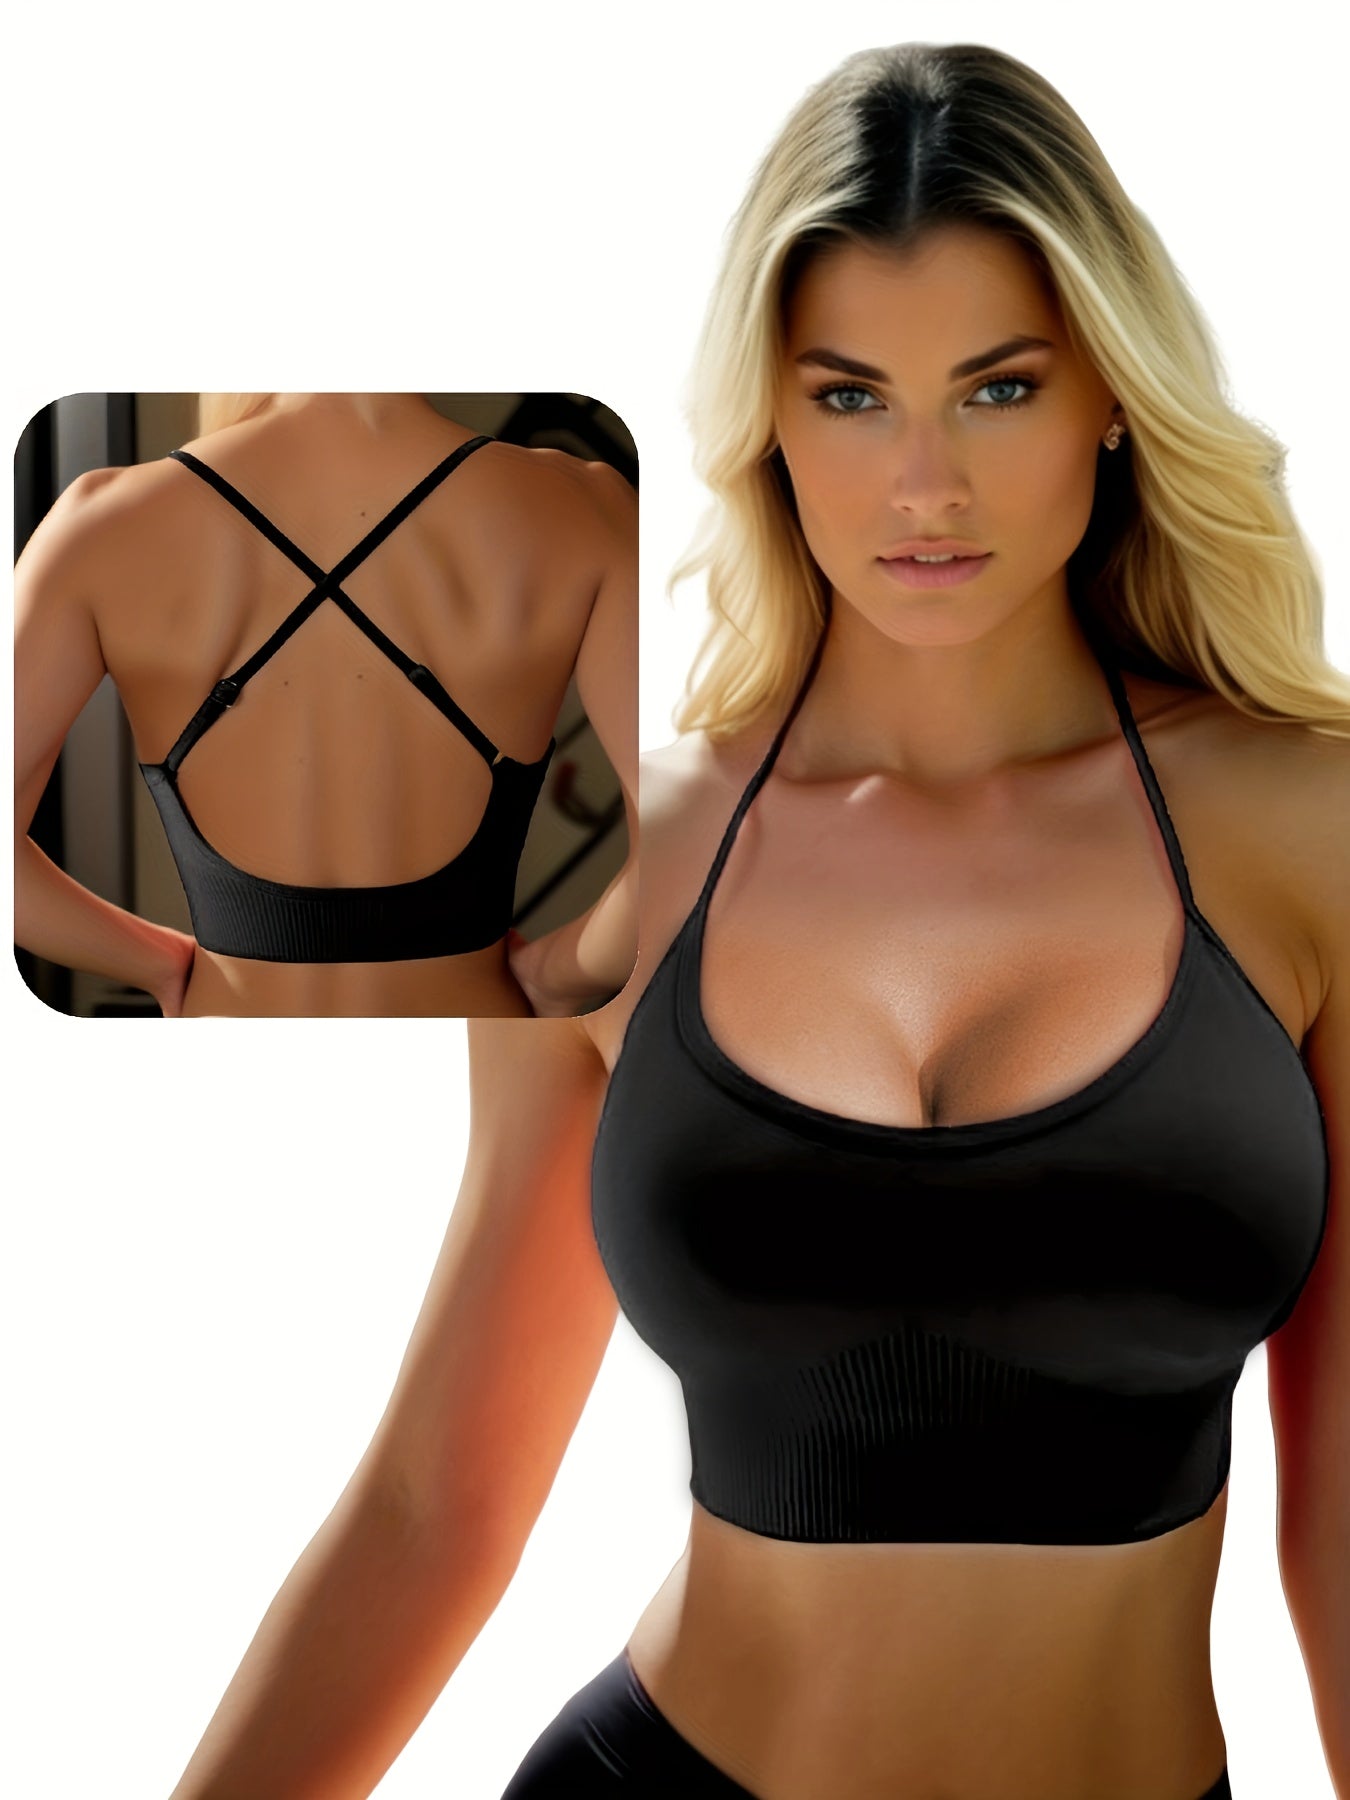 Premium Photo  Woman wearing a sports bra with criss cross strap